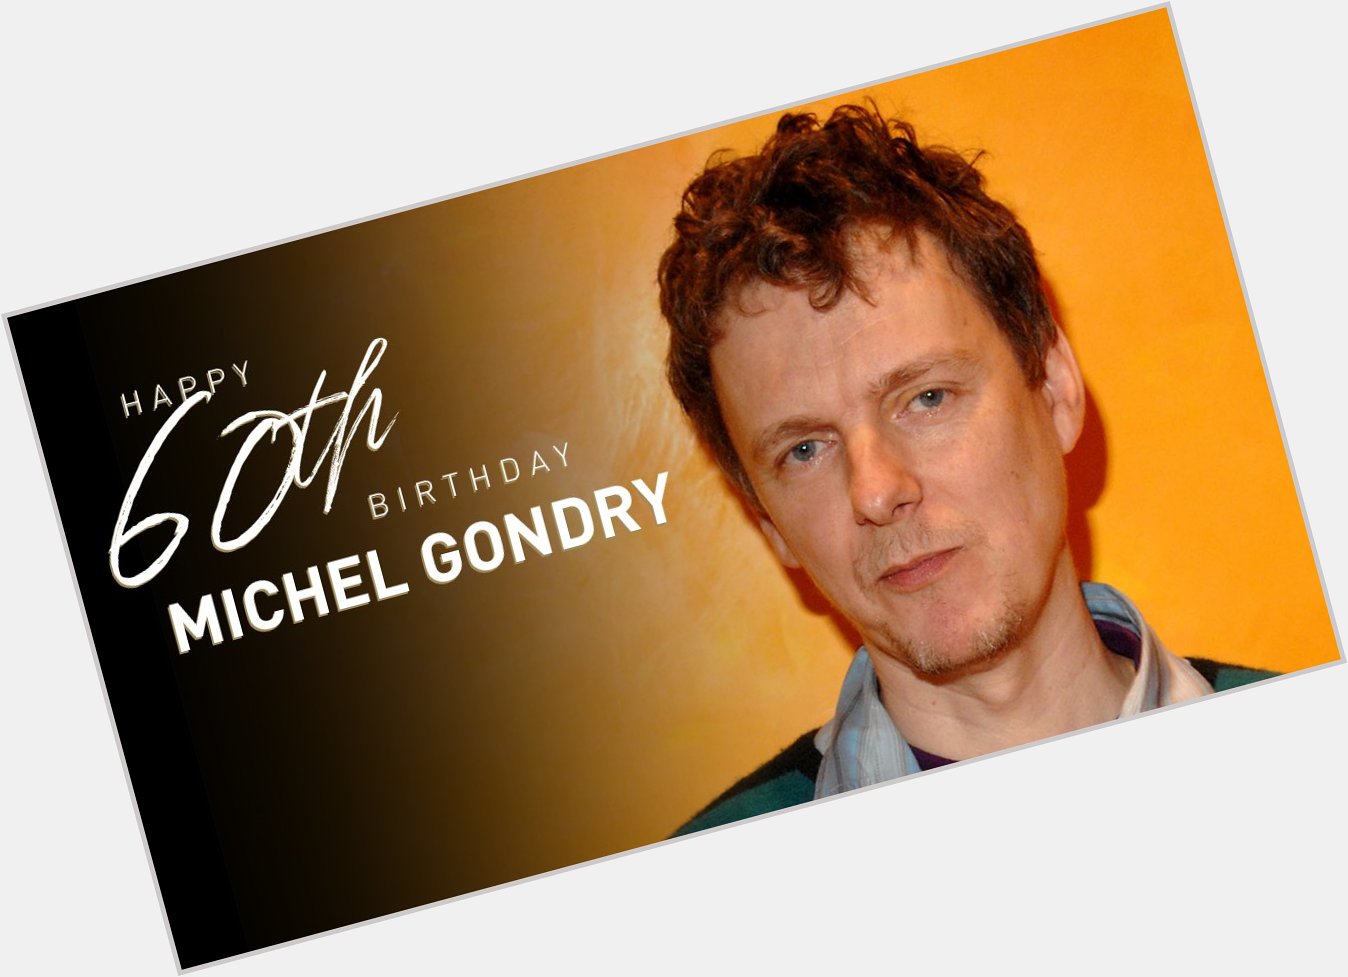 Happy 60th birthday Michel Gondry!

Read his bio here:  